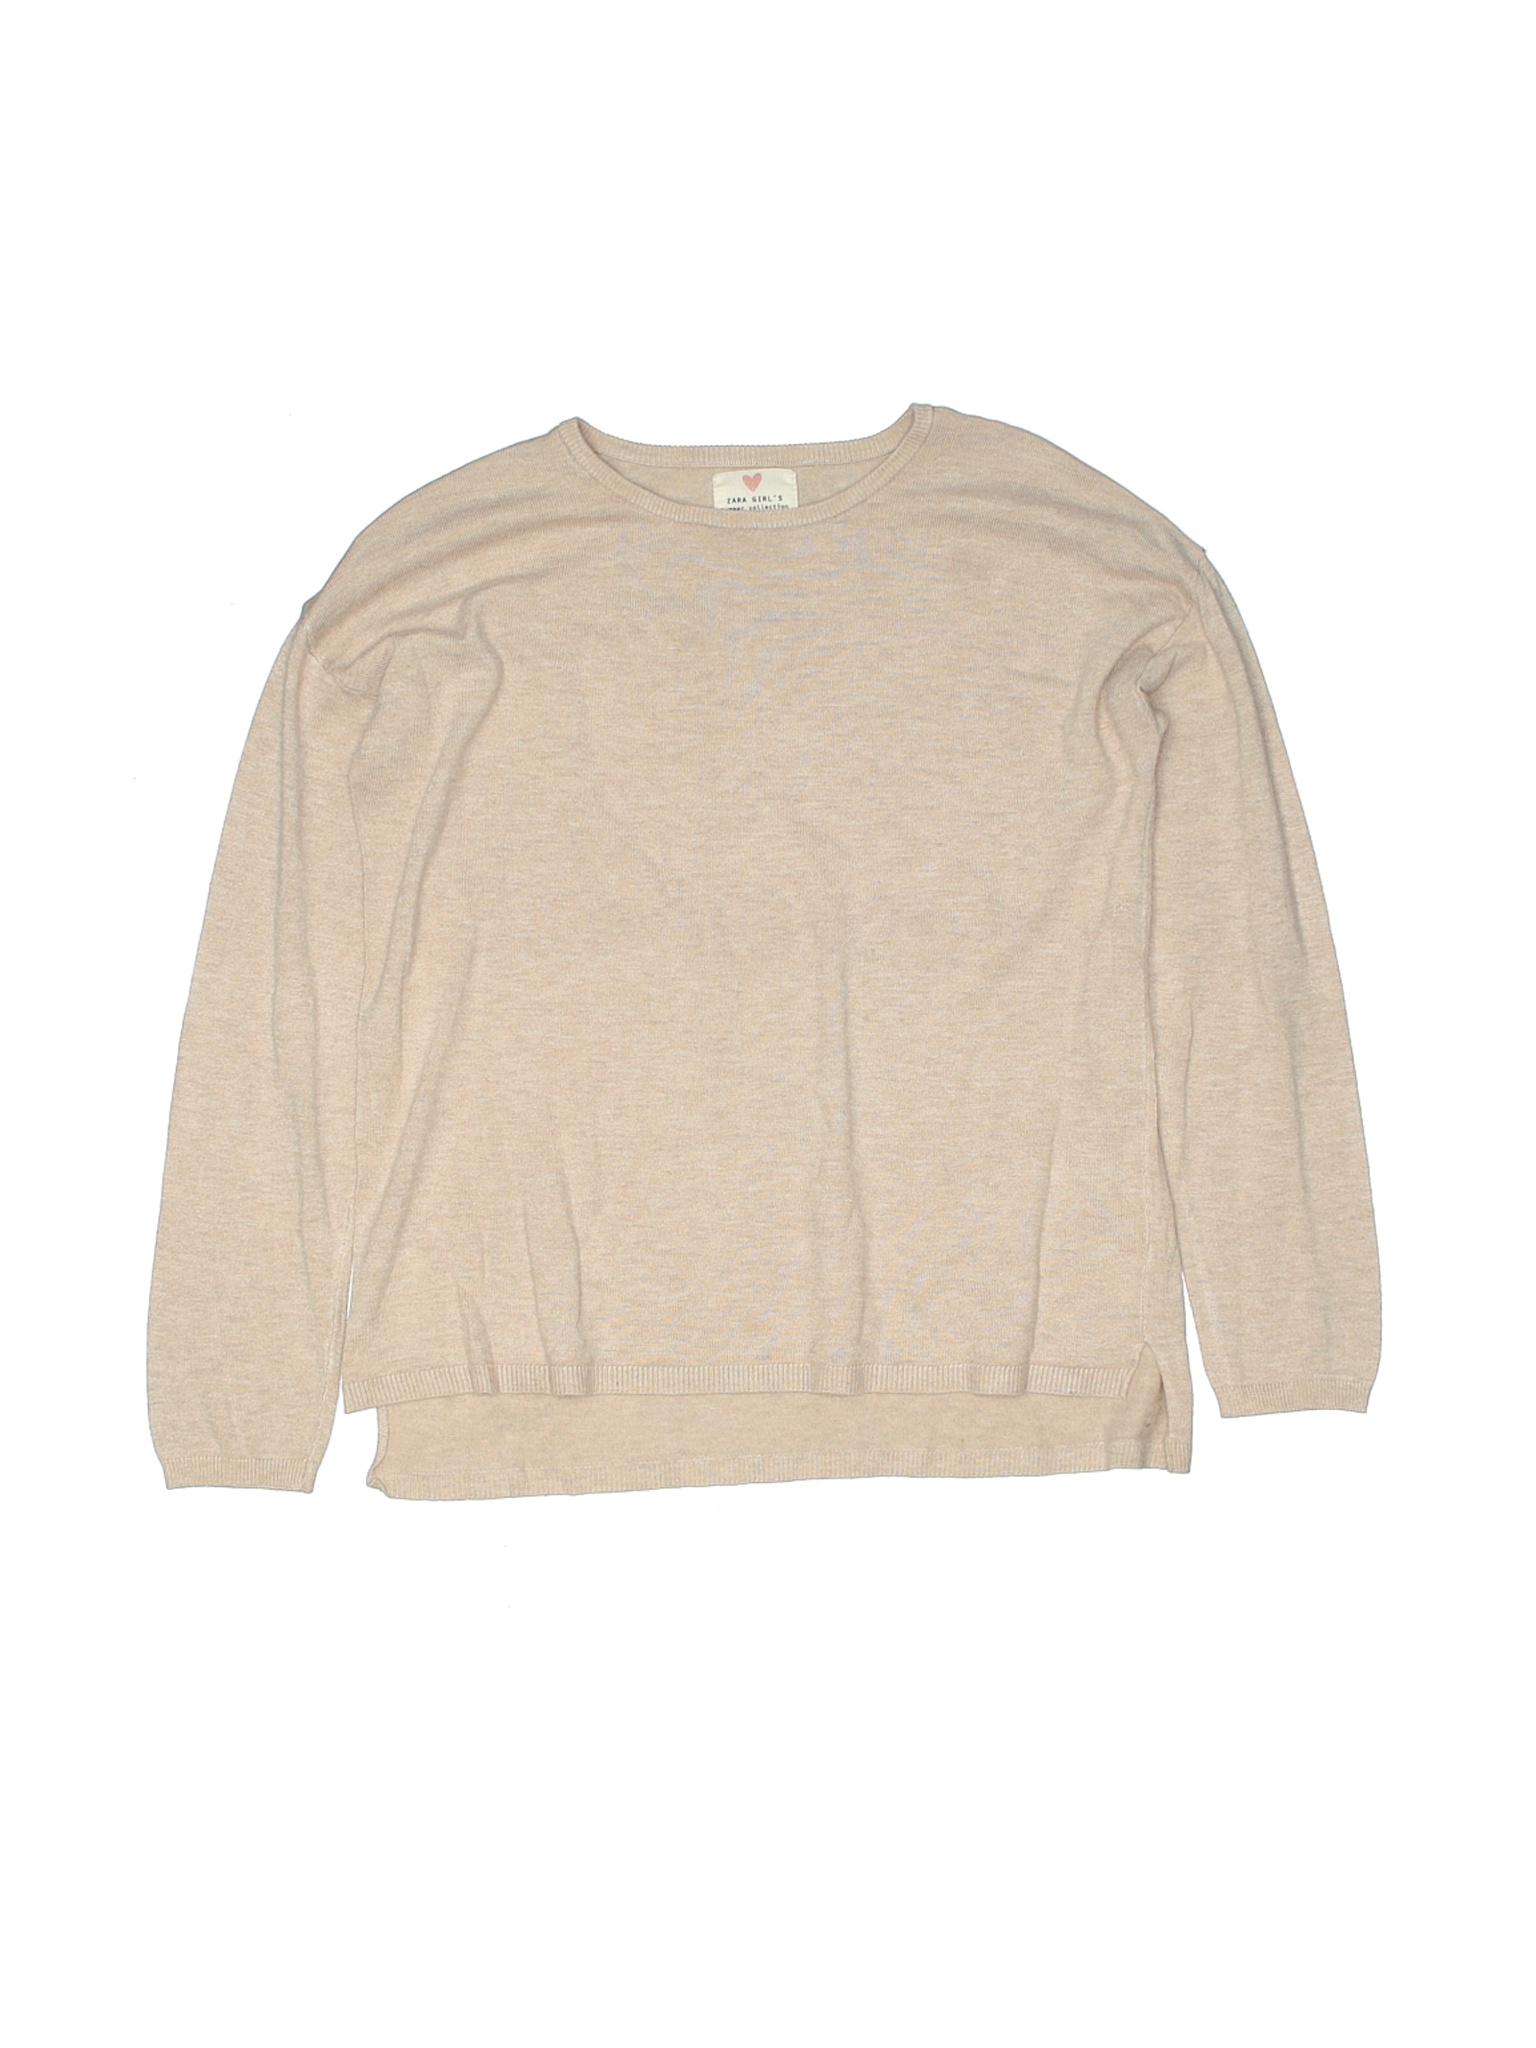 Zara Girls Brown Pullover Sweater 11 | eBay